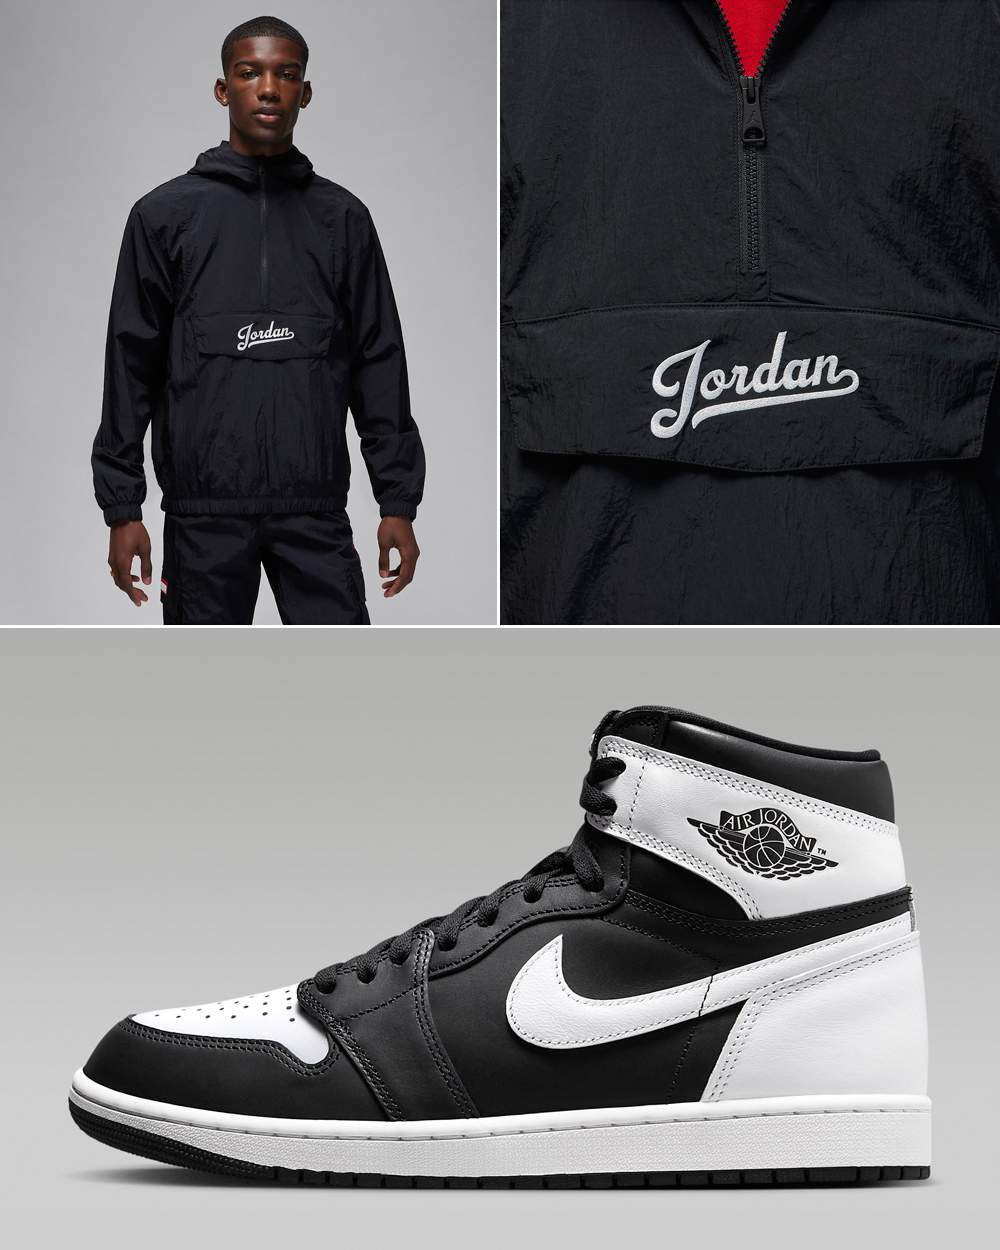 Air-Jordan-1-High-OG-Black-White-Jacket-Outfit